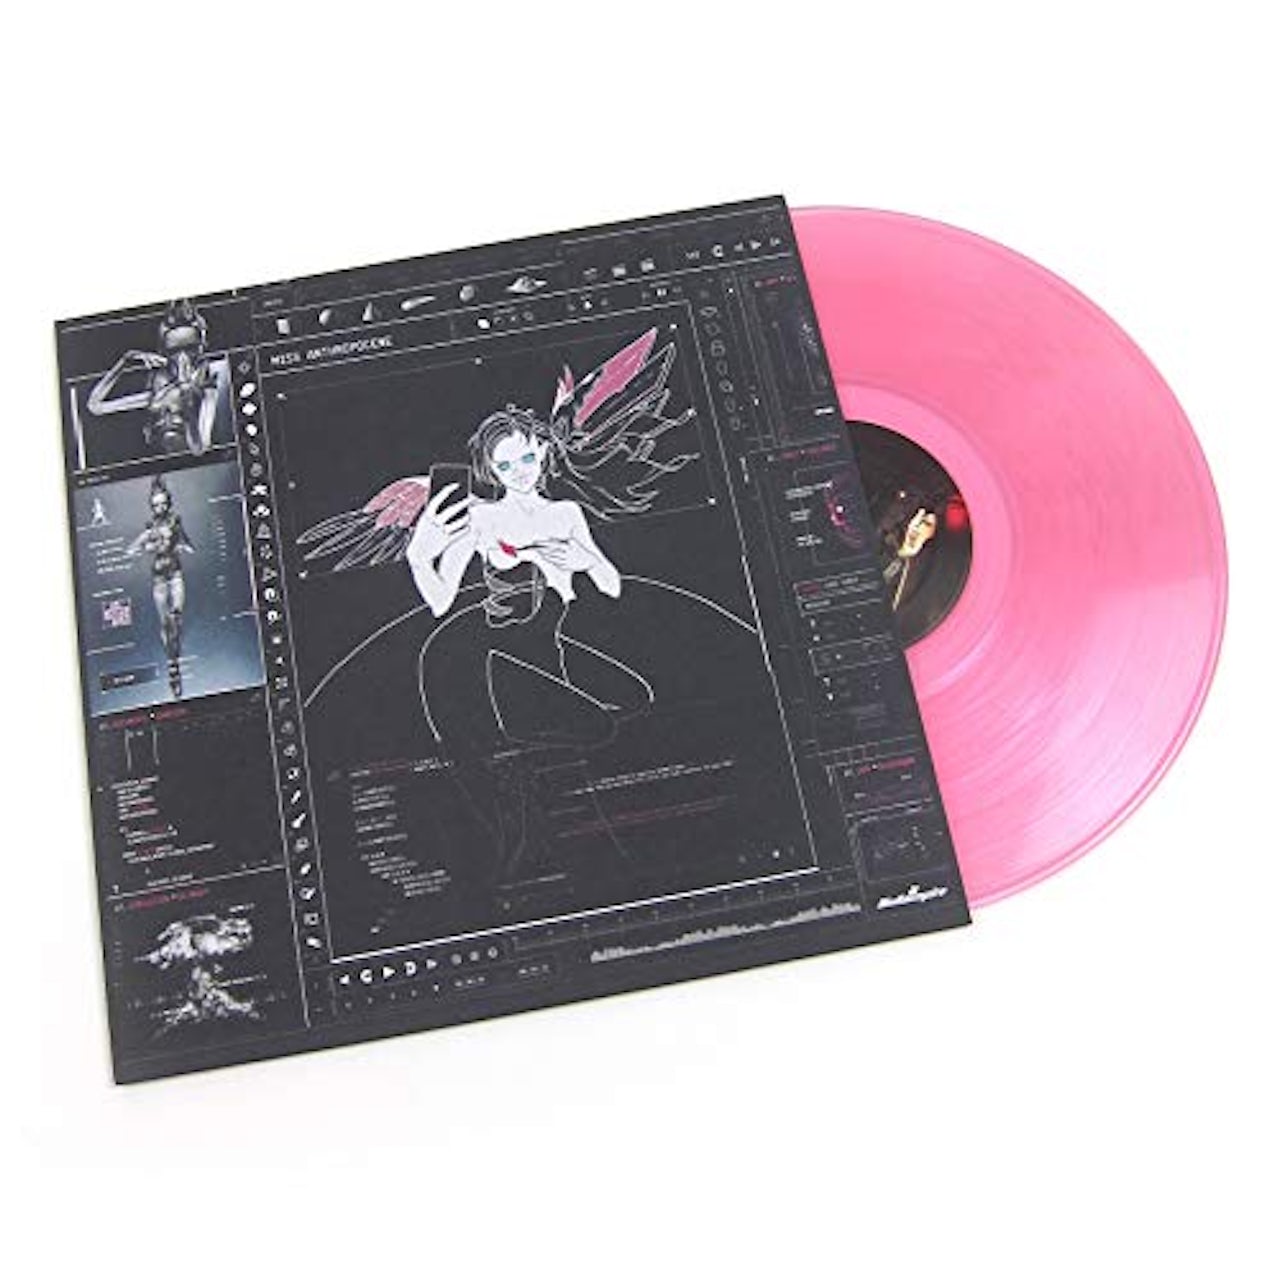 Grimes - Miss Anthropocene (Limited Edition on Pink Vinyl)